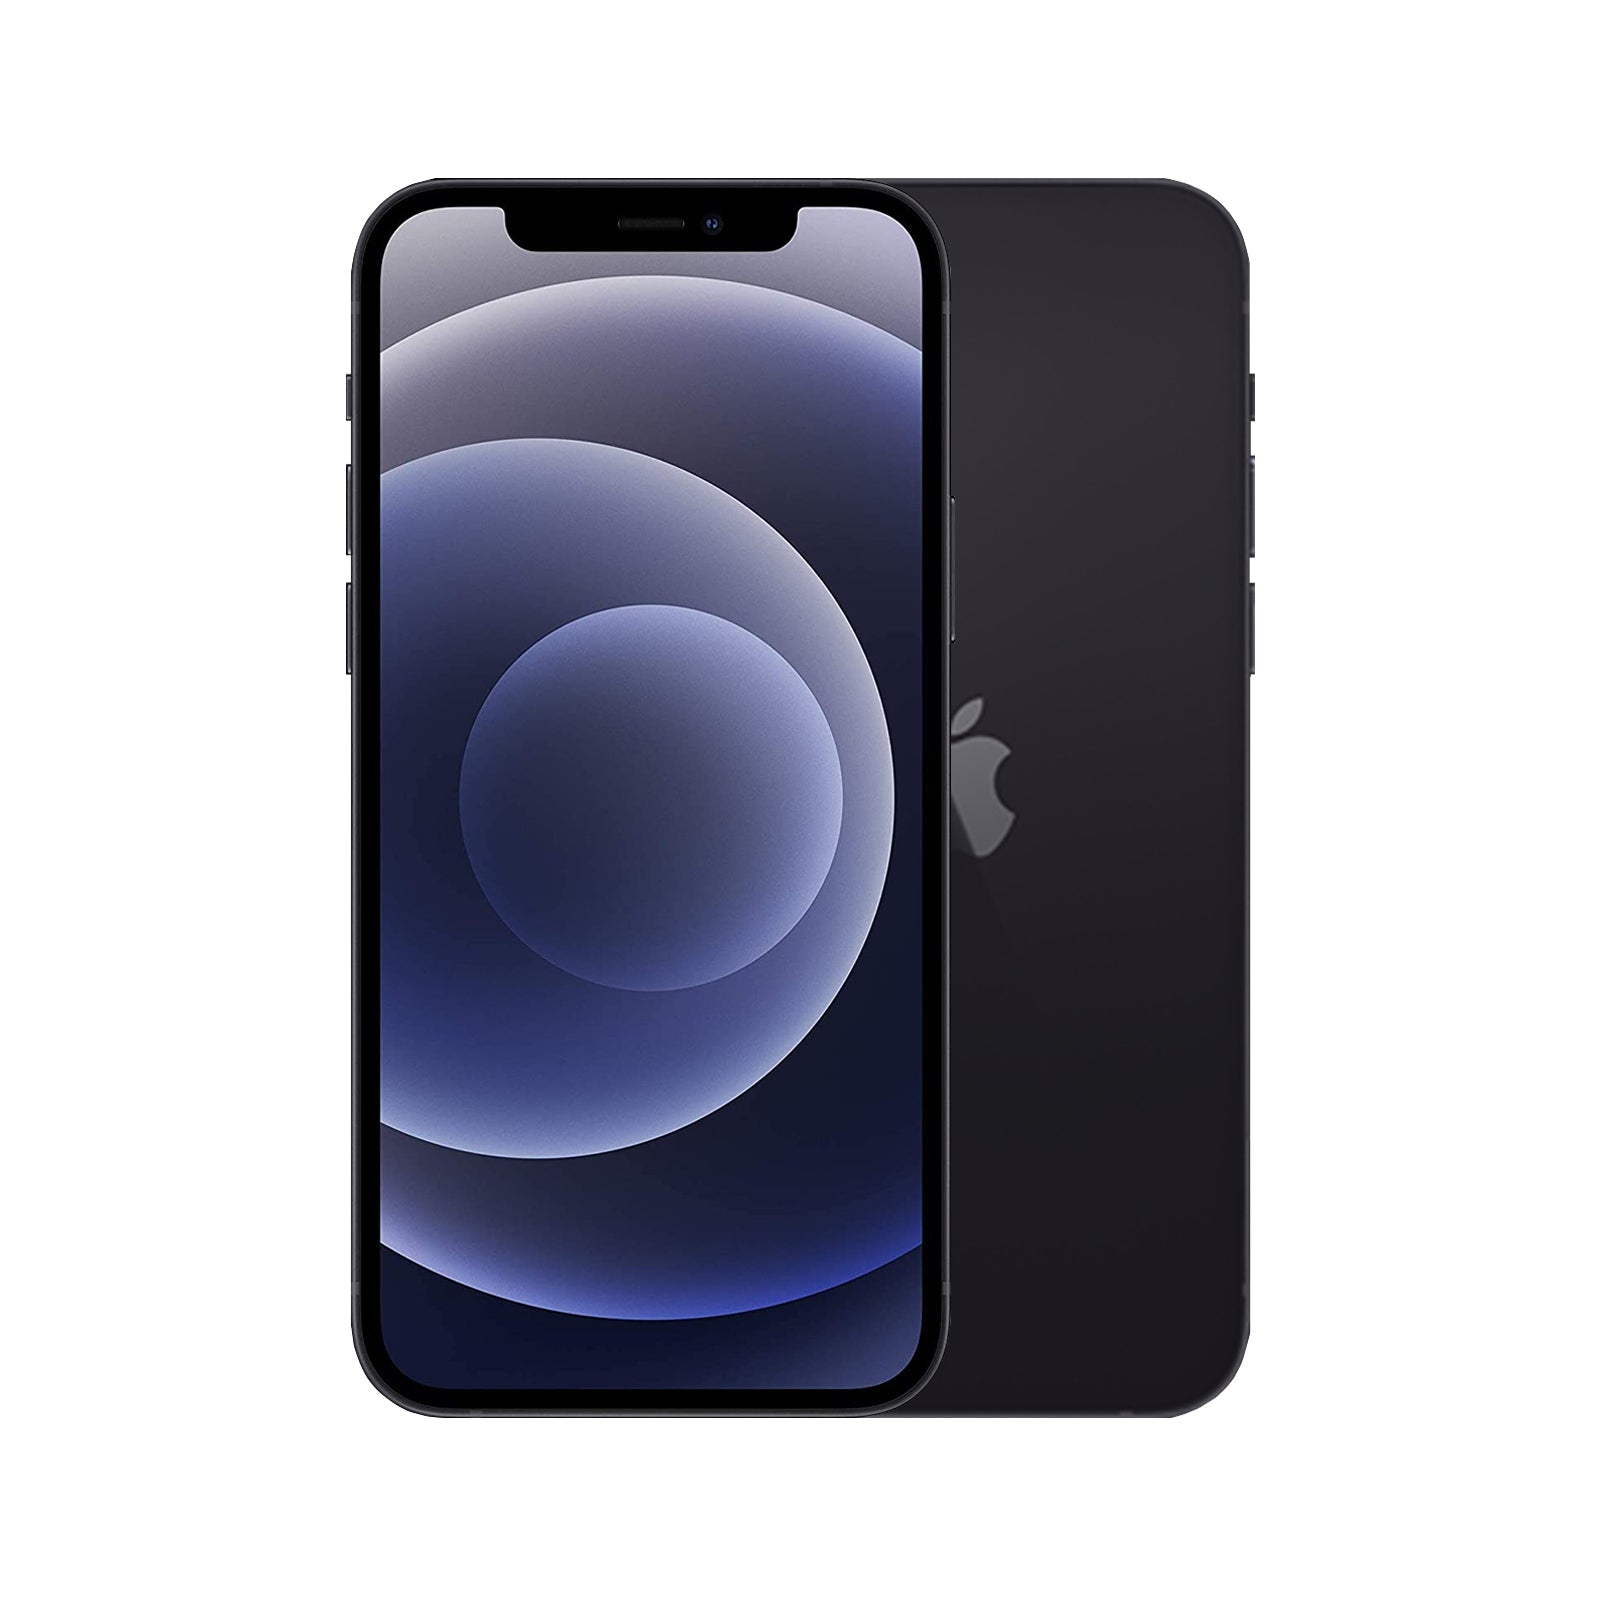 Apple iPhone 12 64GB Black - Very Good - Refurbished